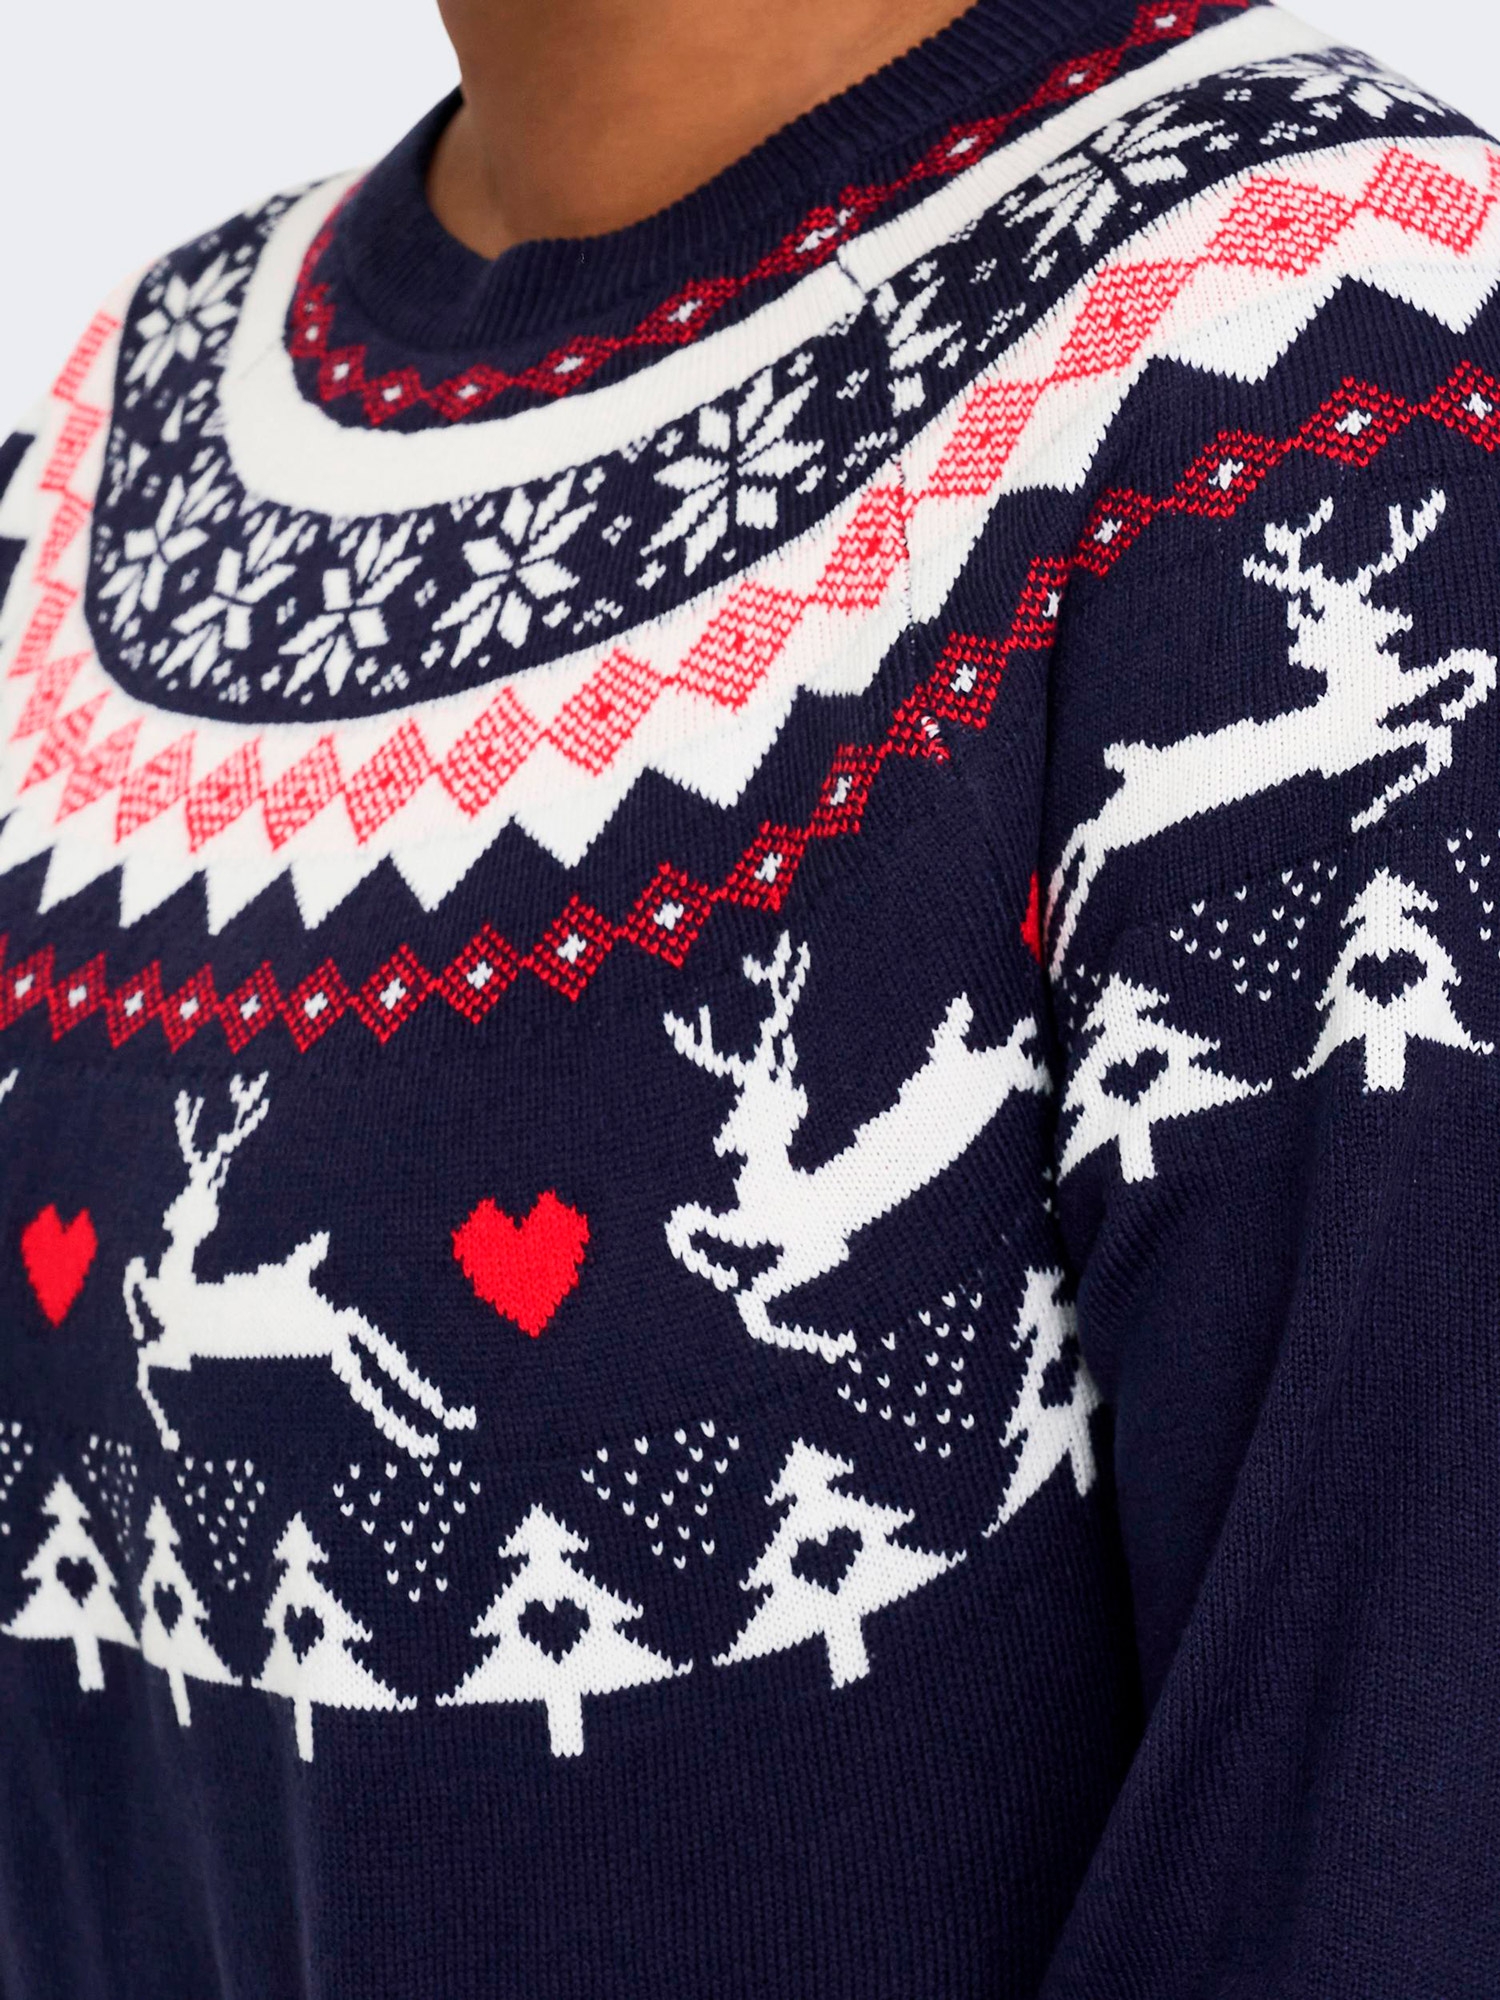 Car SNOW - blå strikket kjole med fint jule mønster fra Only Carmakoma